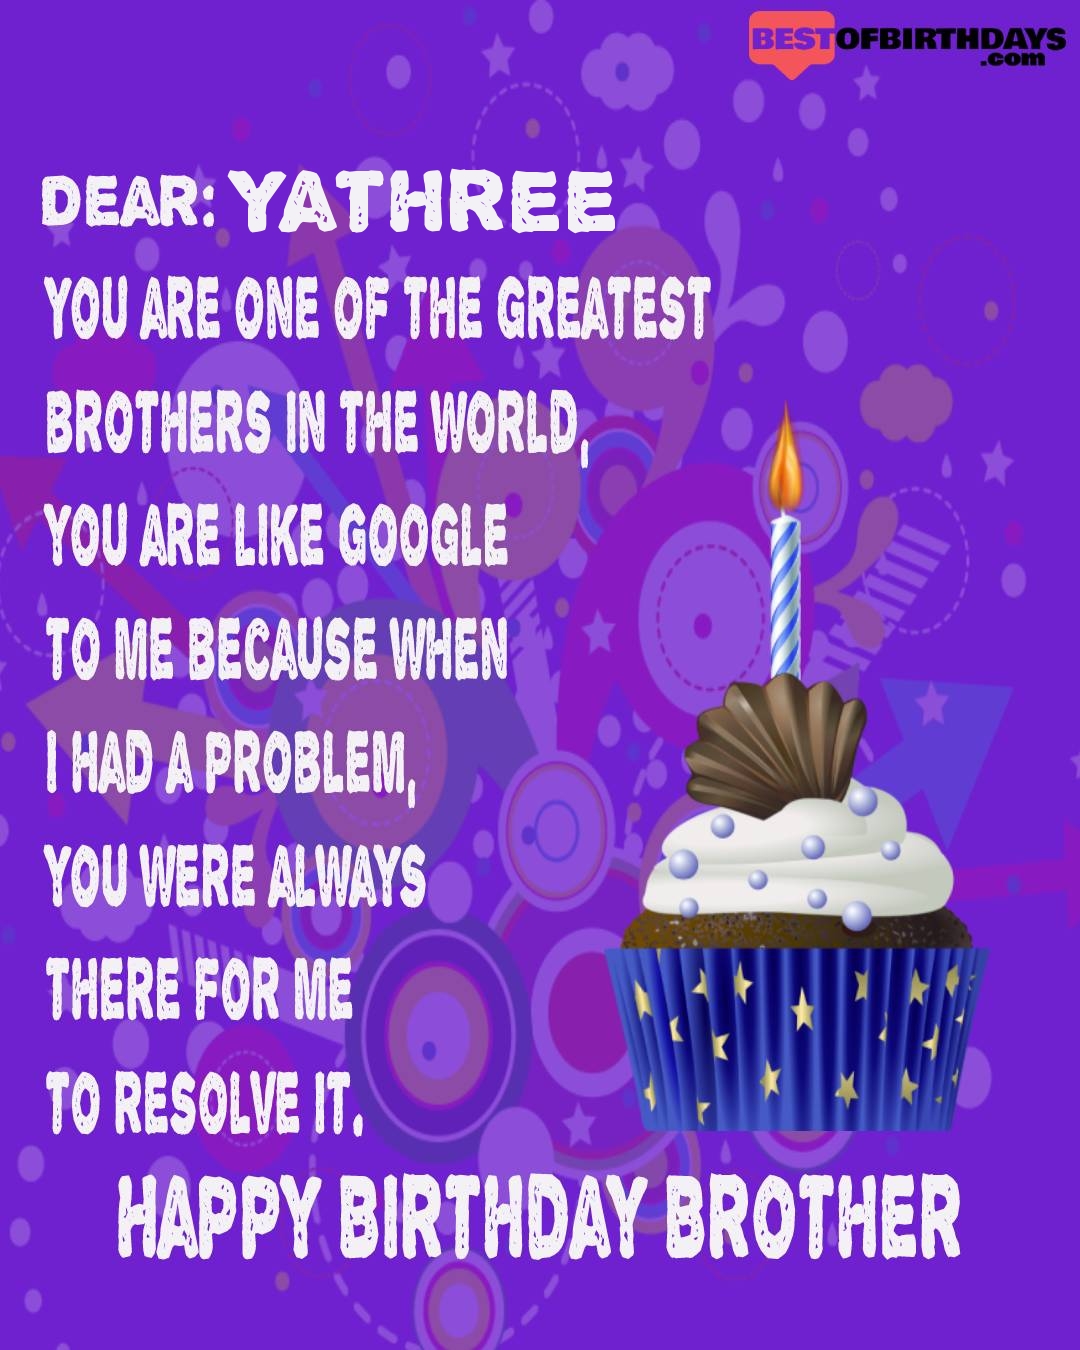 Happy birthday yathree bhai brother bro